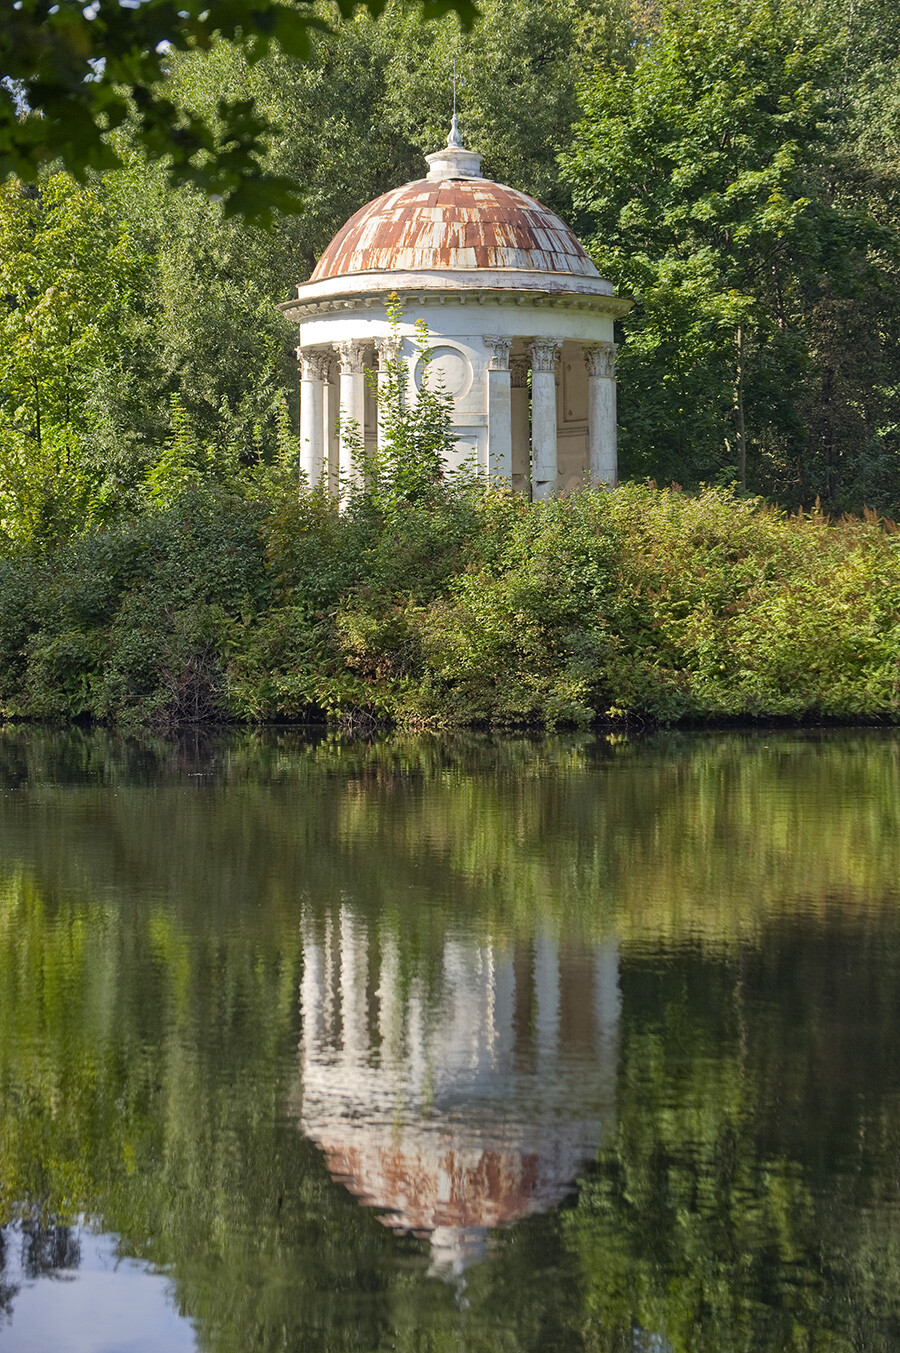 Bykovo estate park. Neoclassical rotunda reflected in pond. August 30, 2014.